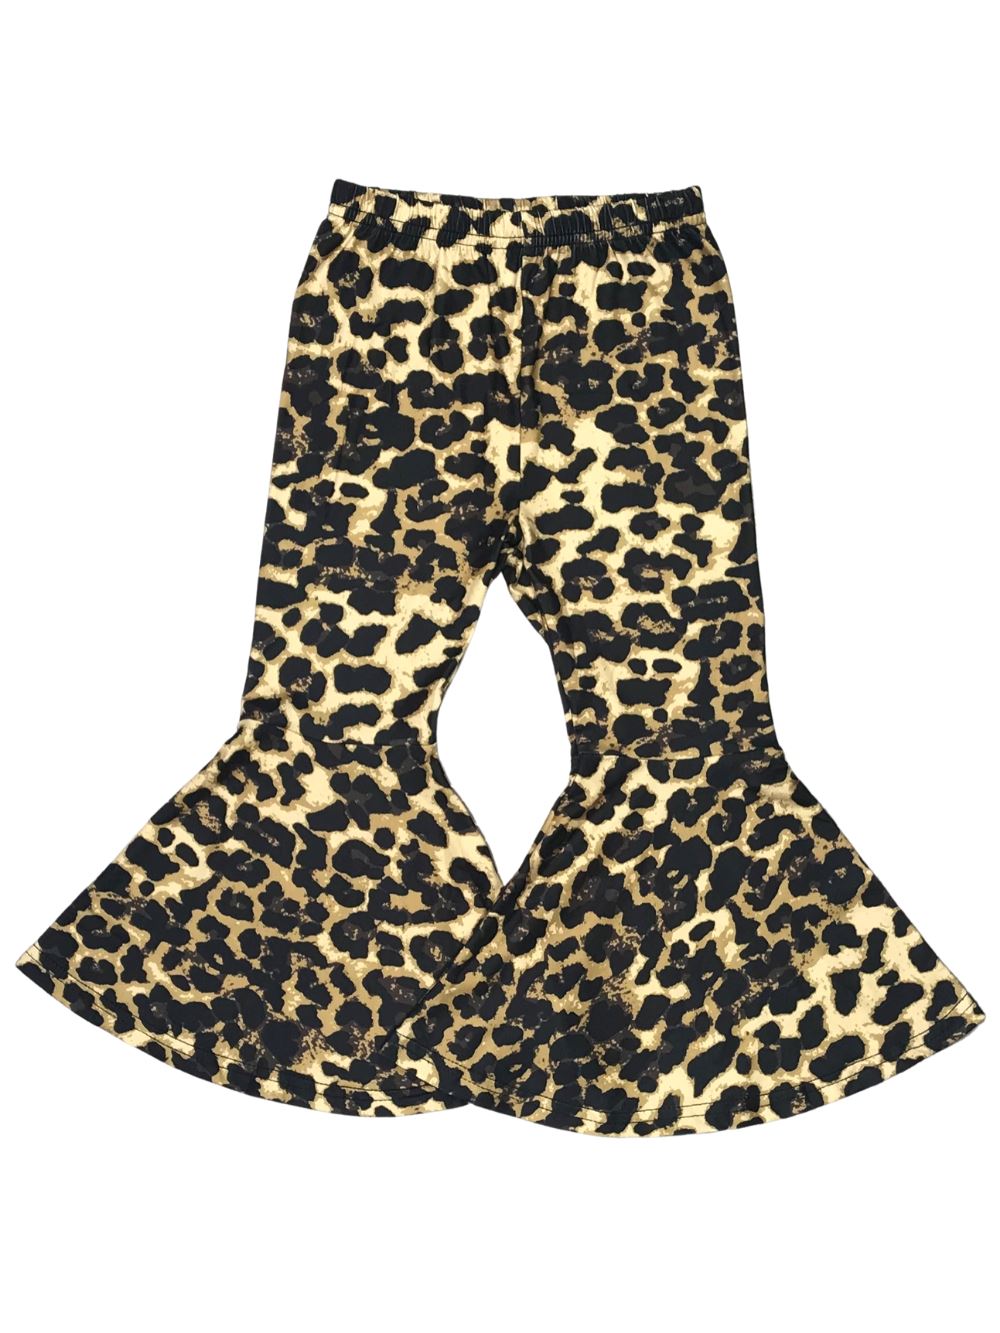 Girls Boutique Cheetah Bell Bottom Pants, Ships Fast